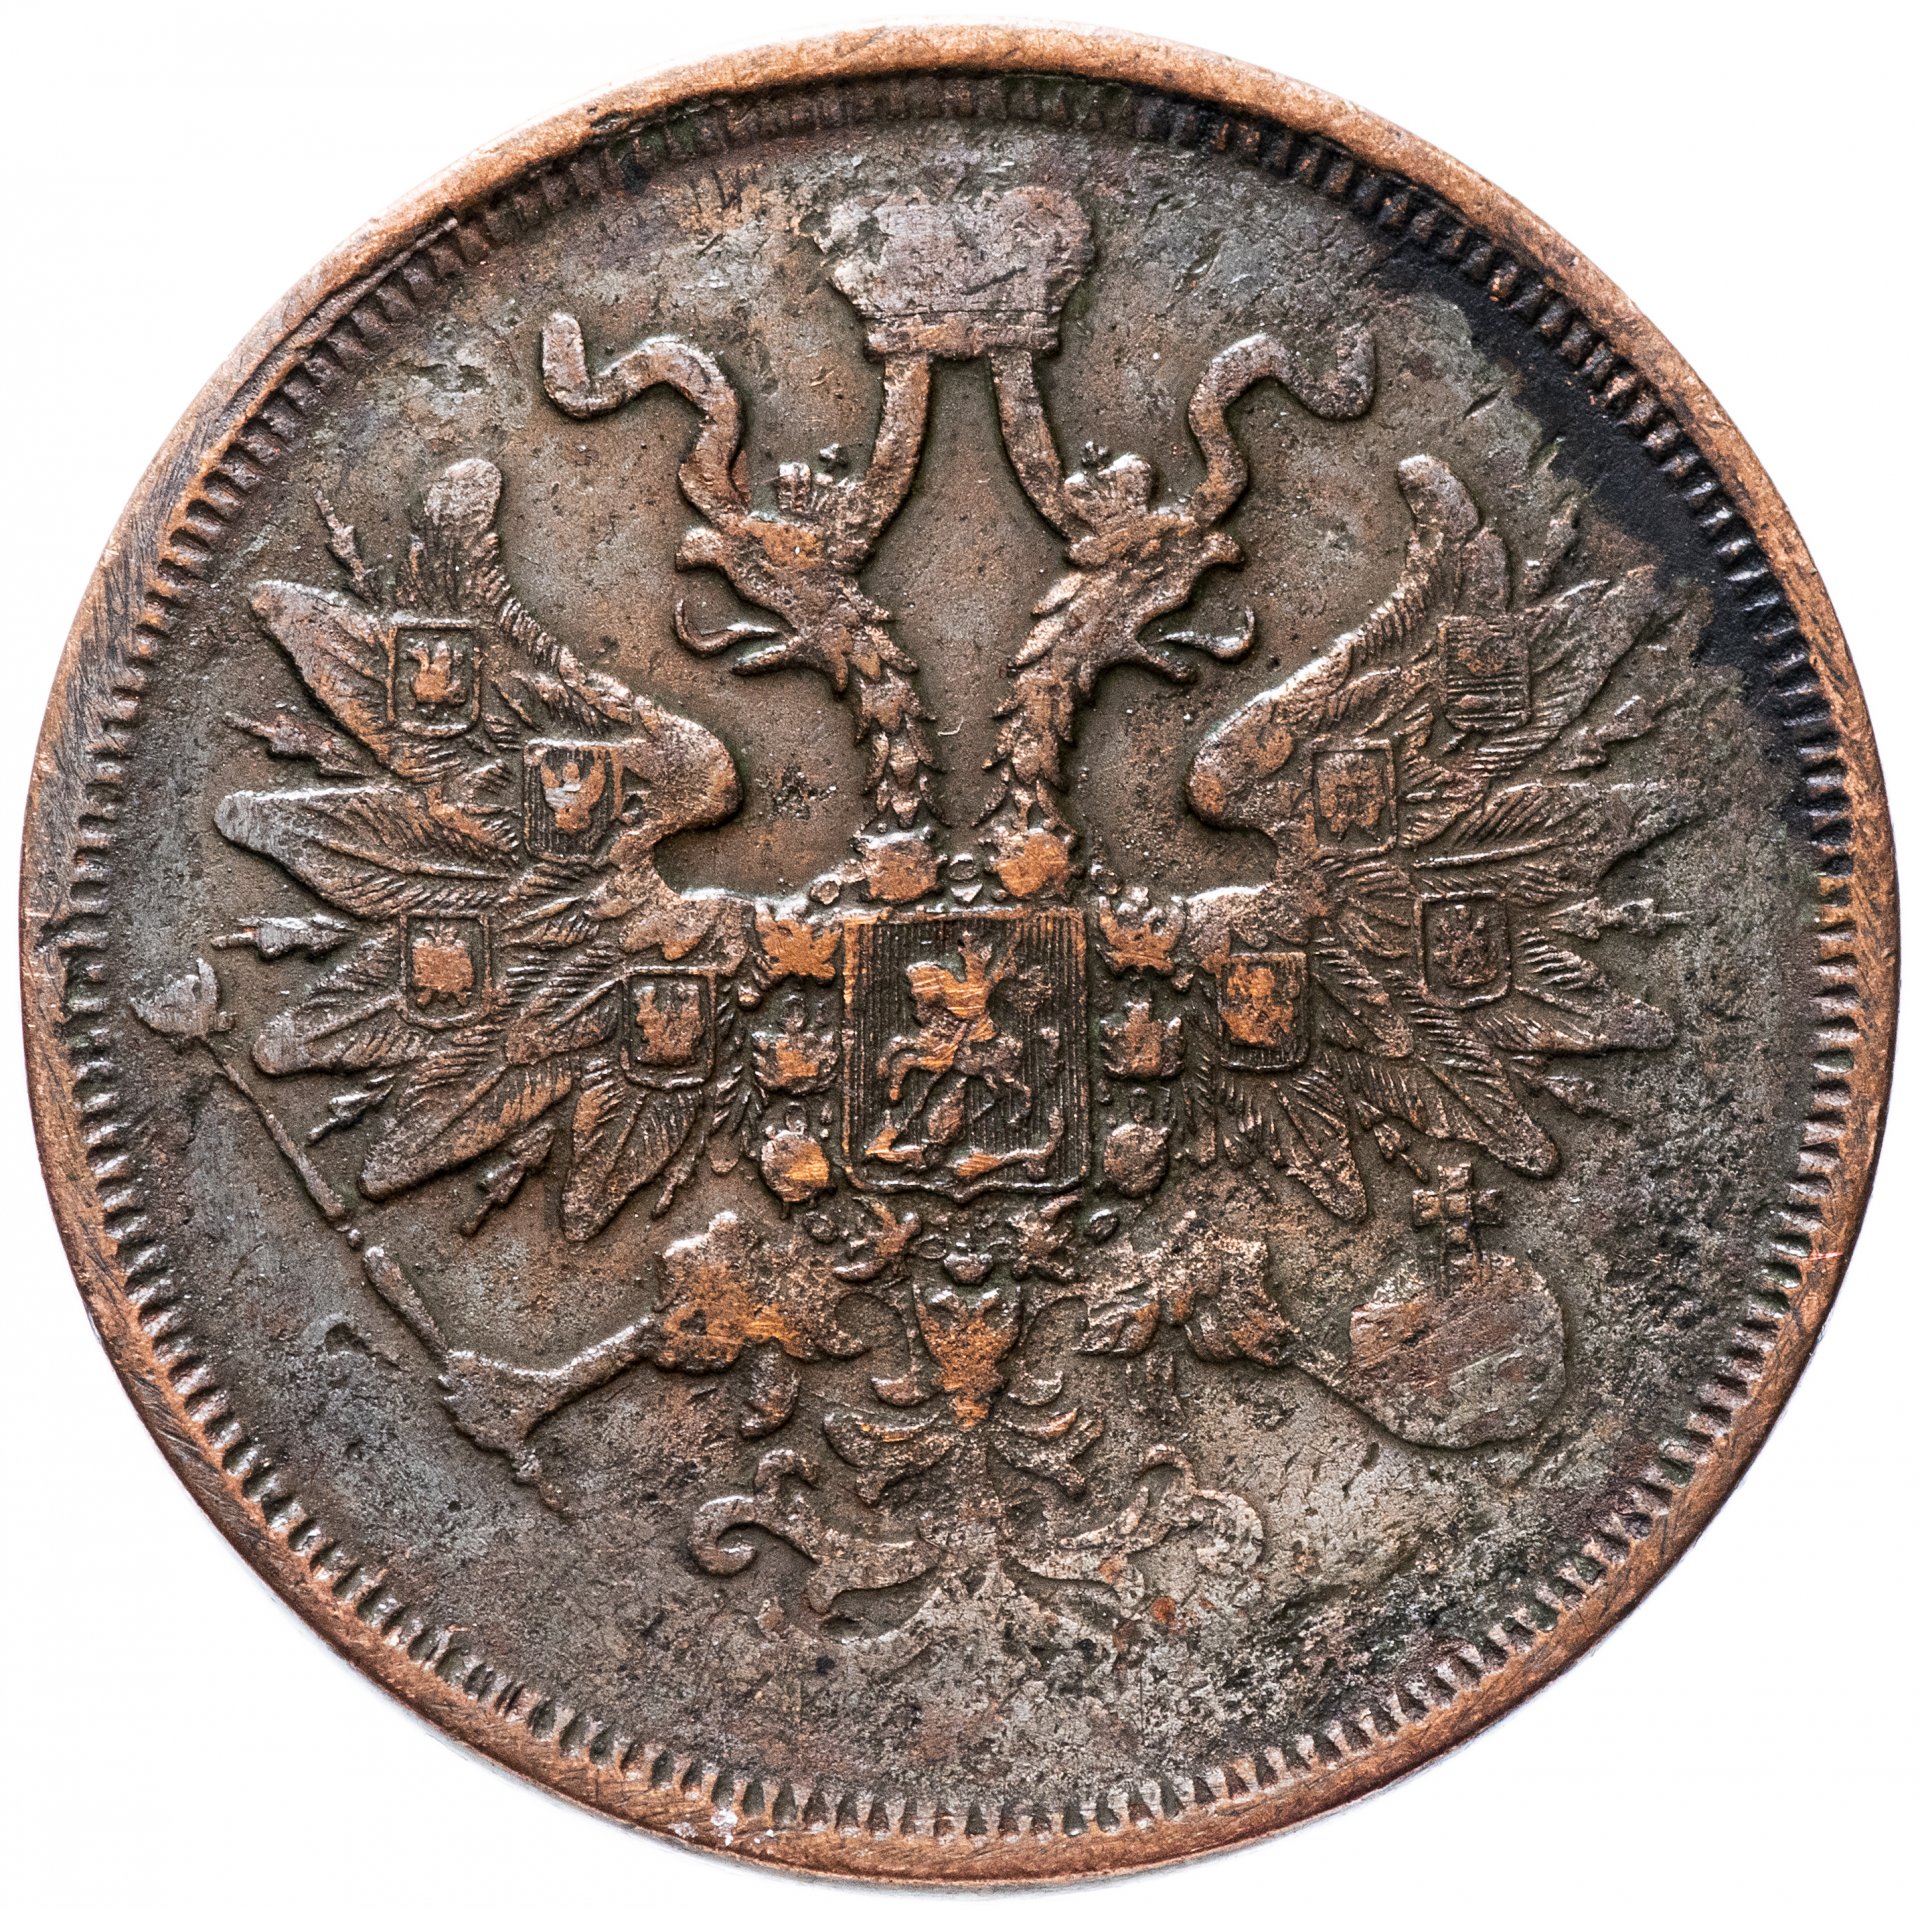 Царские 5 копеек. 5 Копеек 1863. Царские монеты 19 века. 5 Копеек 1863 года. Монеты 19 века Franken.